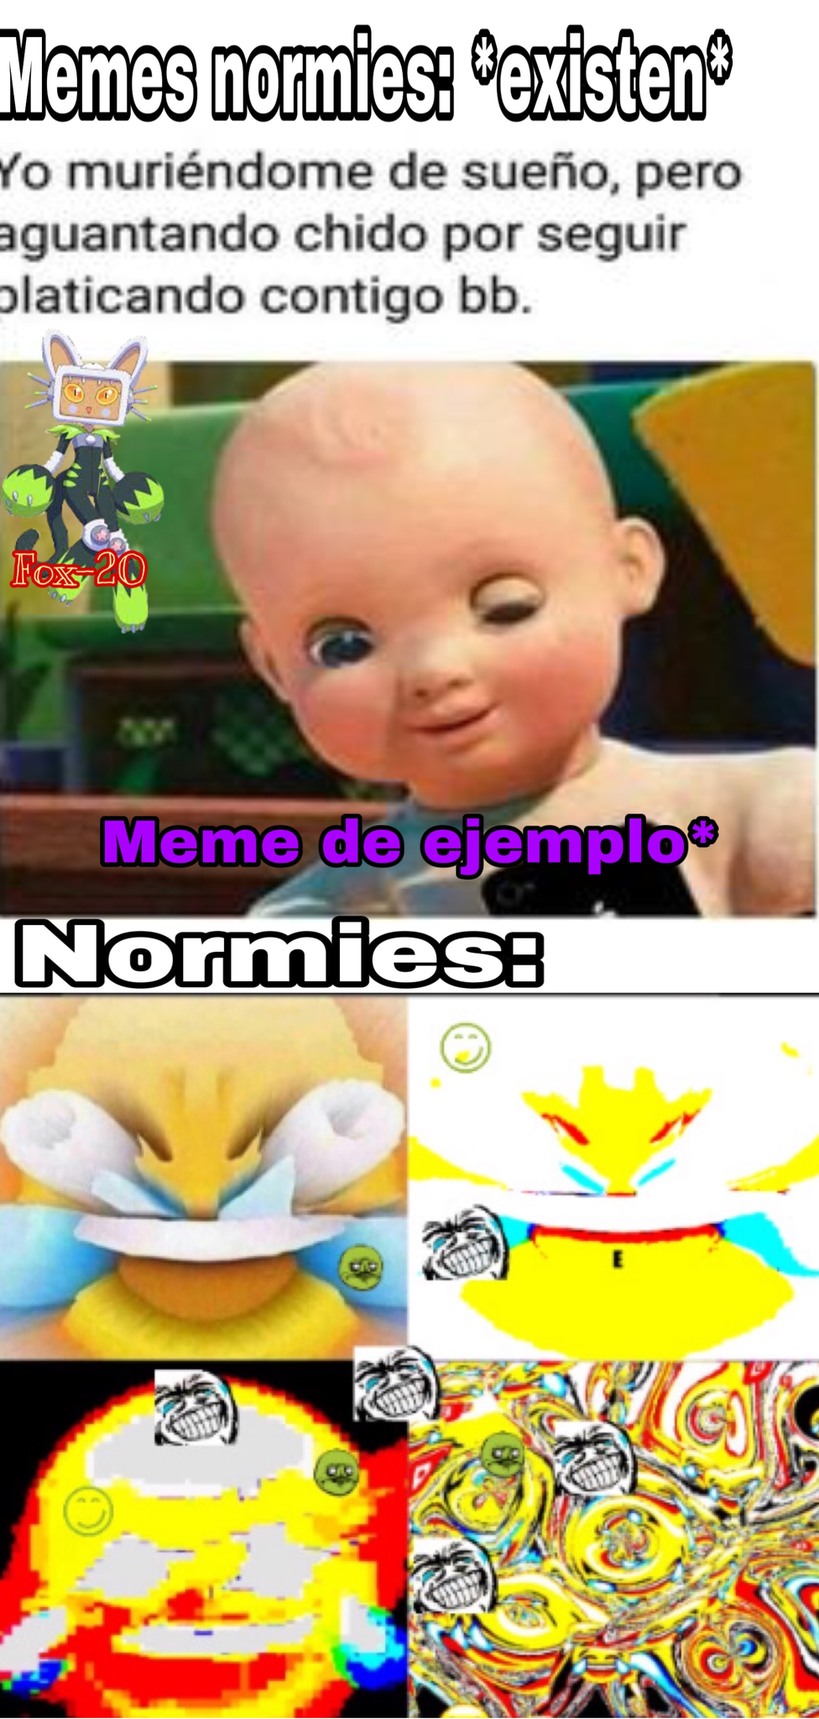 Los memes normies NO dan risa